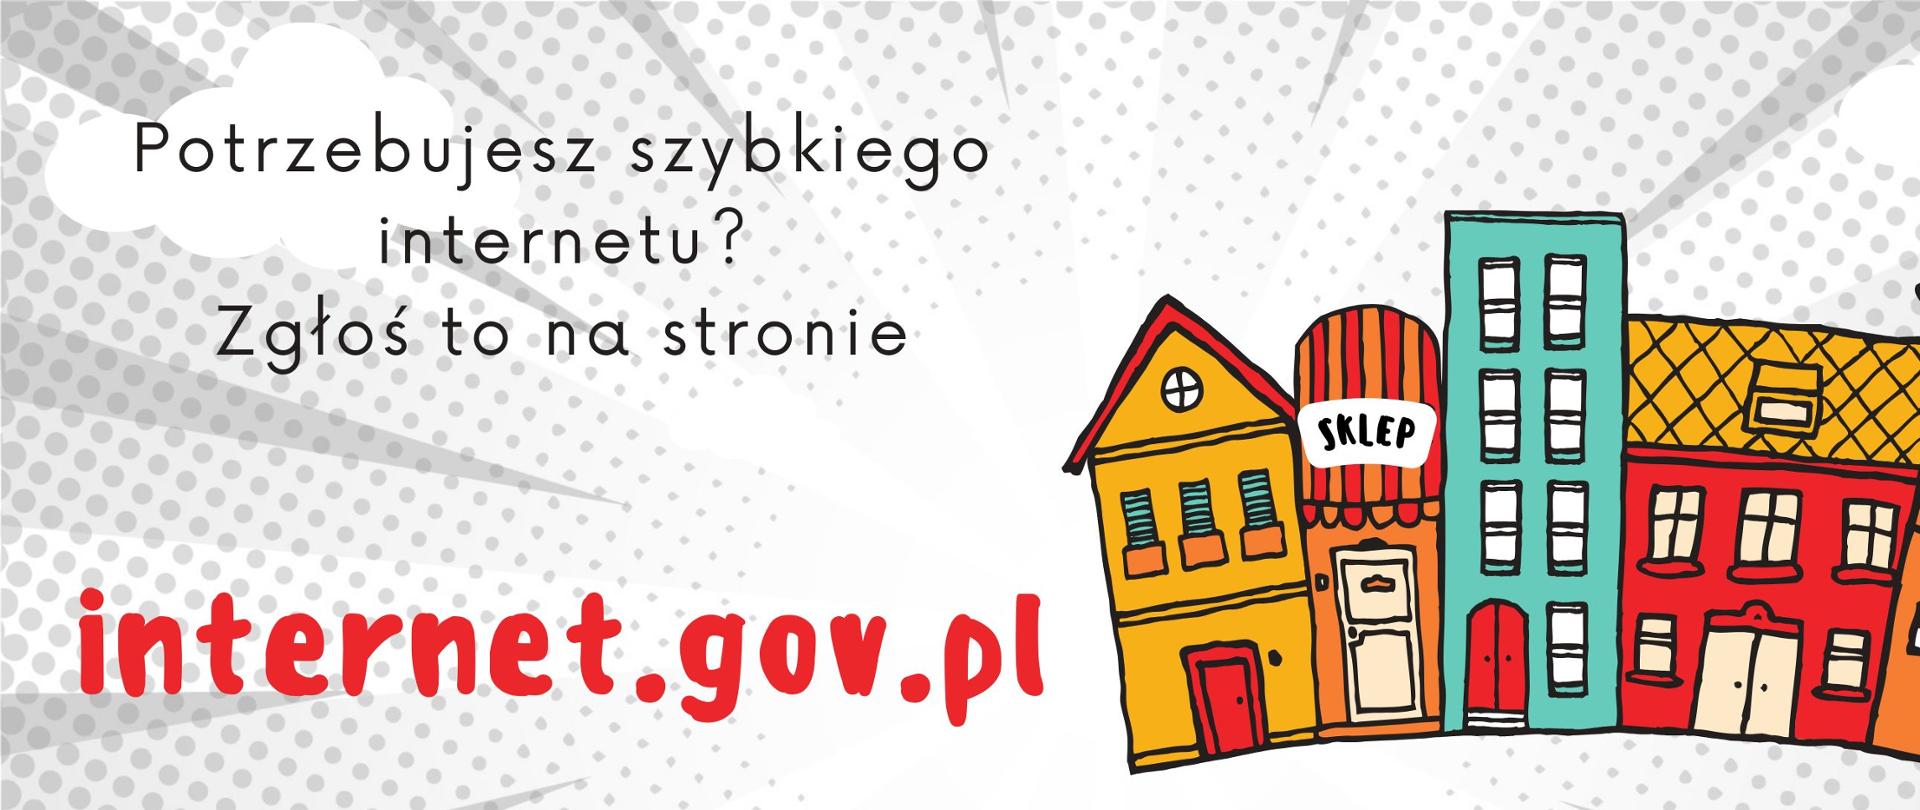 plakat promujący internet.gov.pl